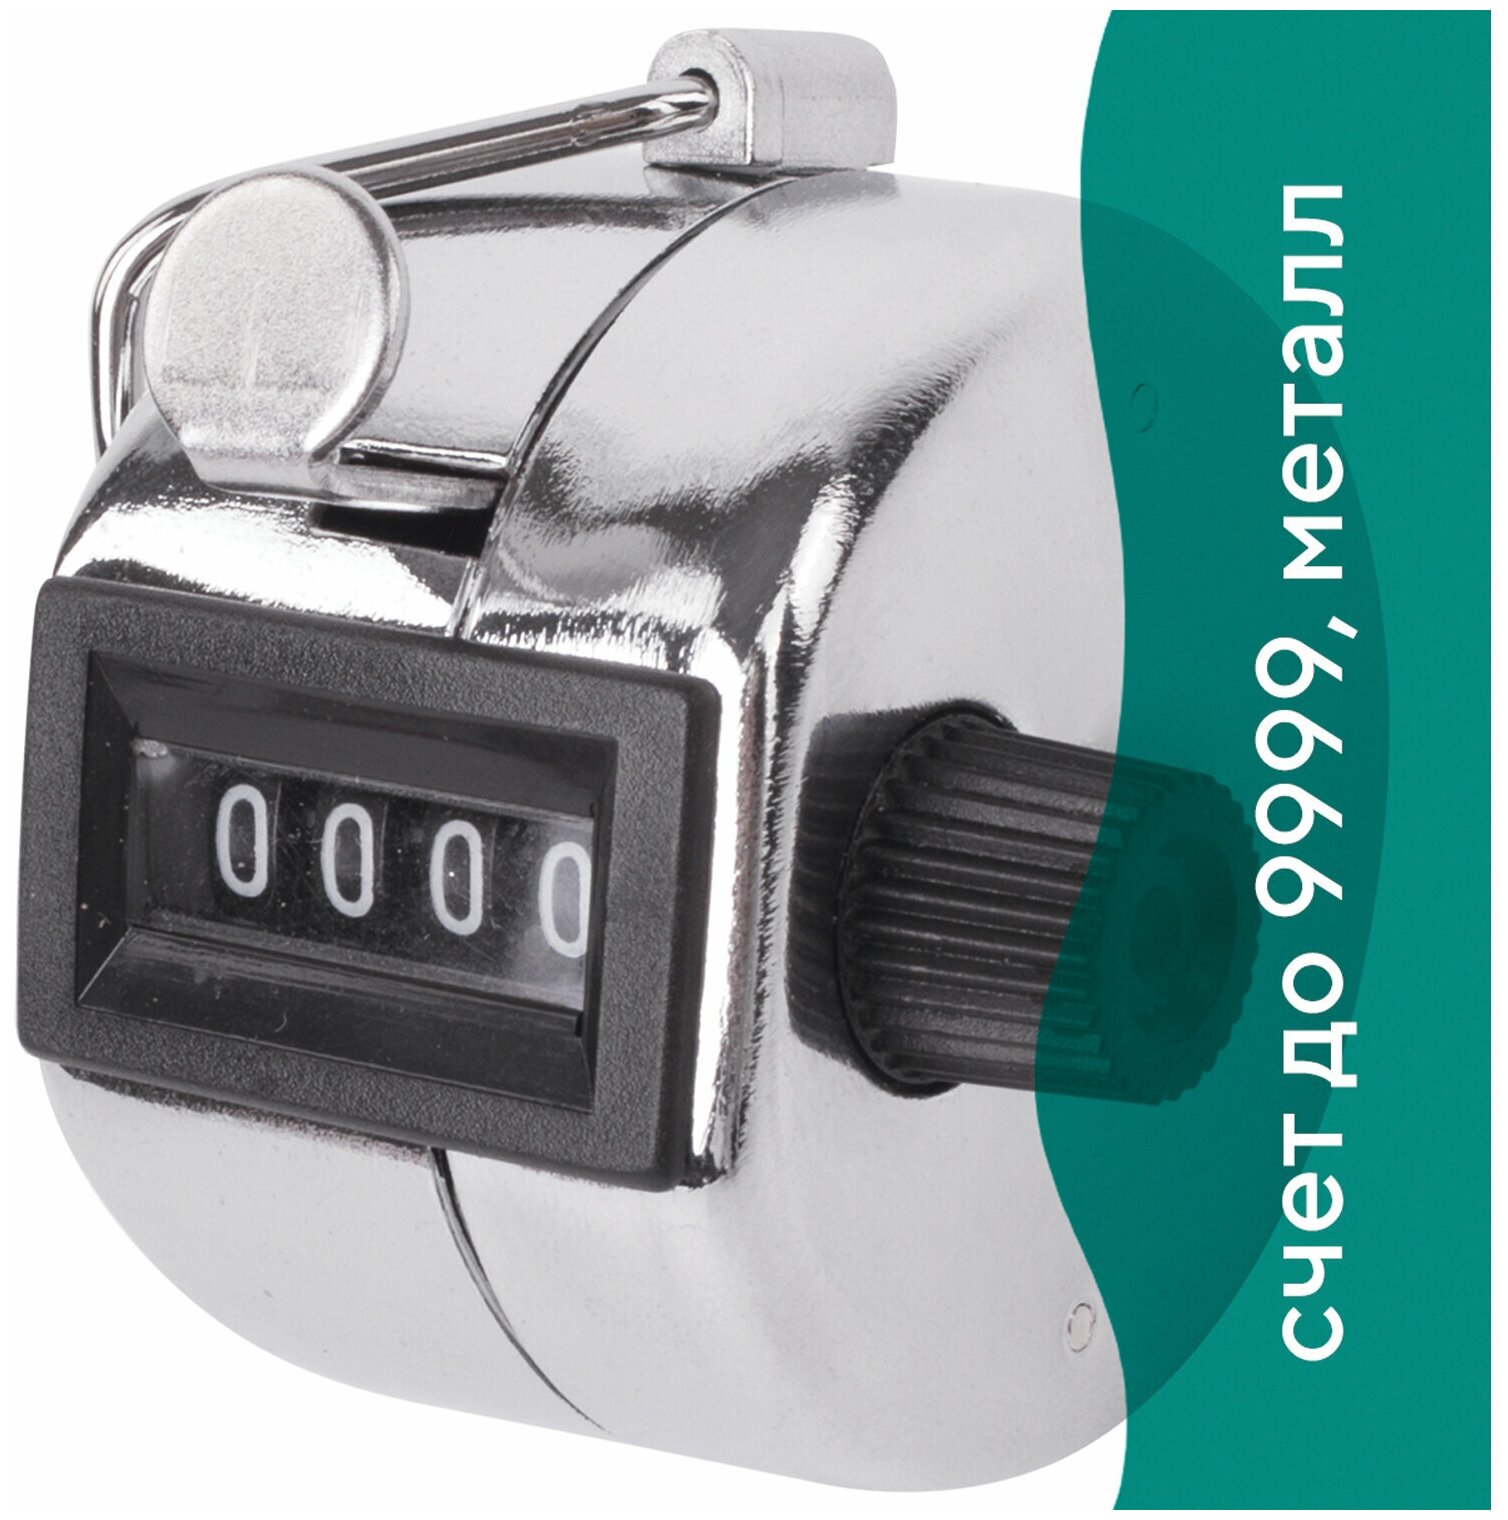 Счетчик механический (кликер), счет от 0 до 9999, корпус металлический, хром, BRAUBERG, 453995 1 шт.